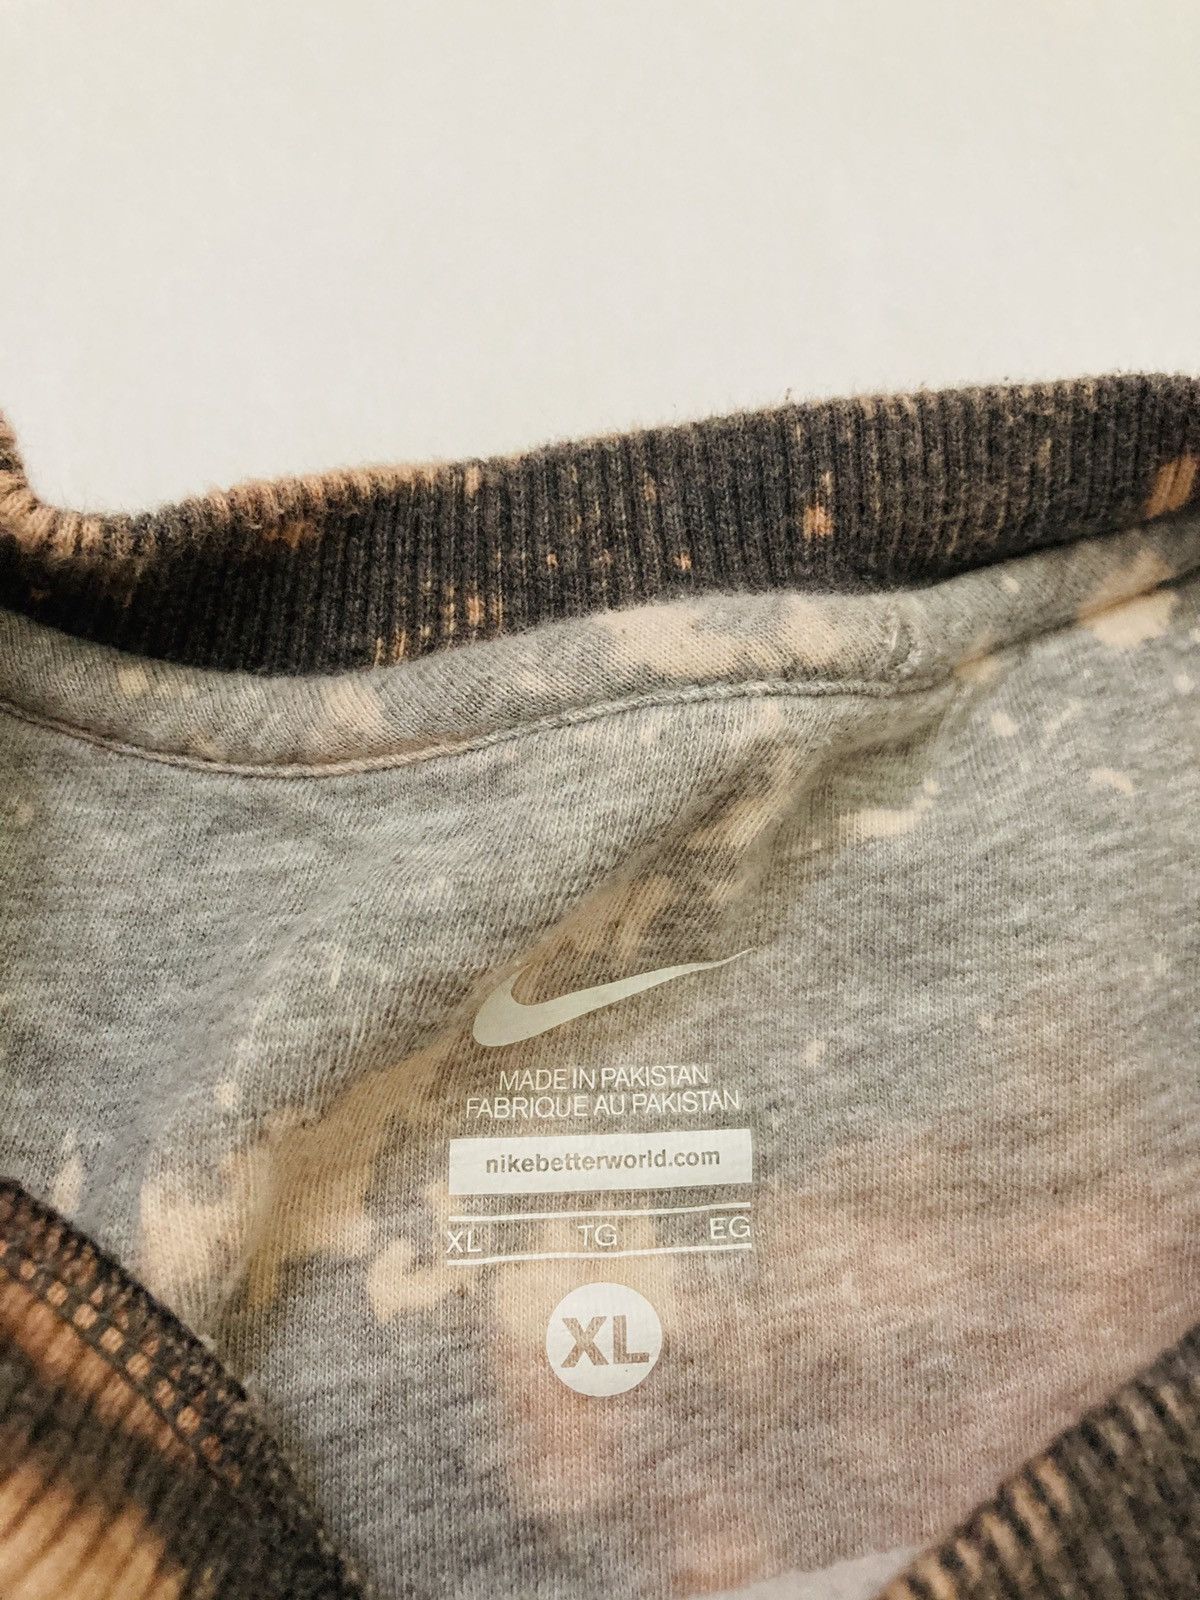 Nike Nike Crewneck Sweatshirt Bleach Brushed Tie Dye Travis Scott Size US XL / EU 56 / 4 - 7 Thumbnail